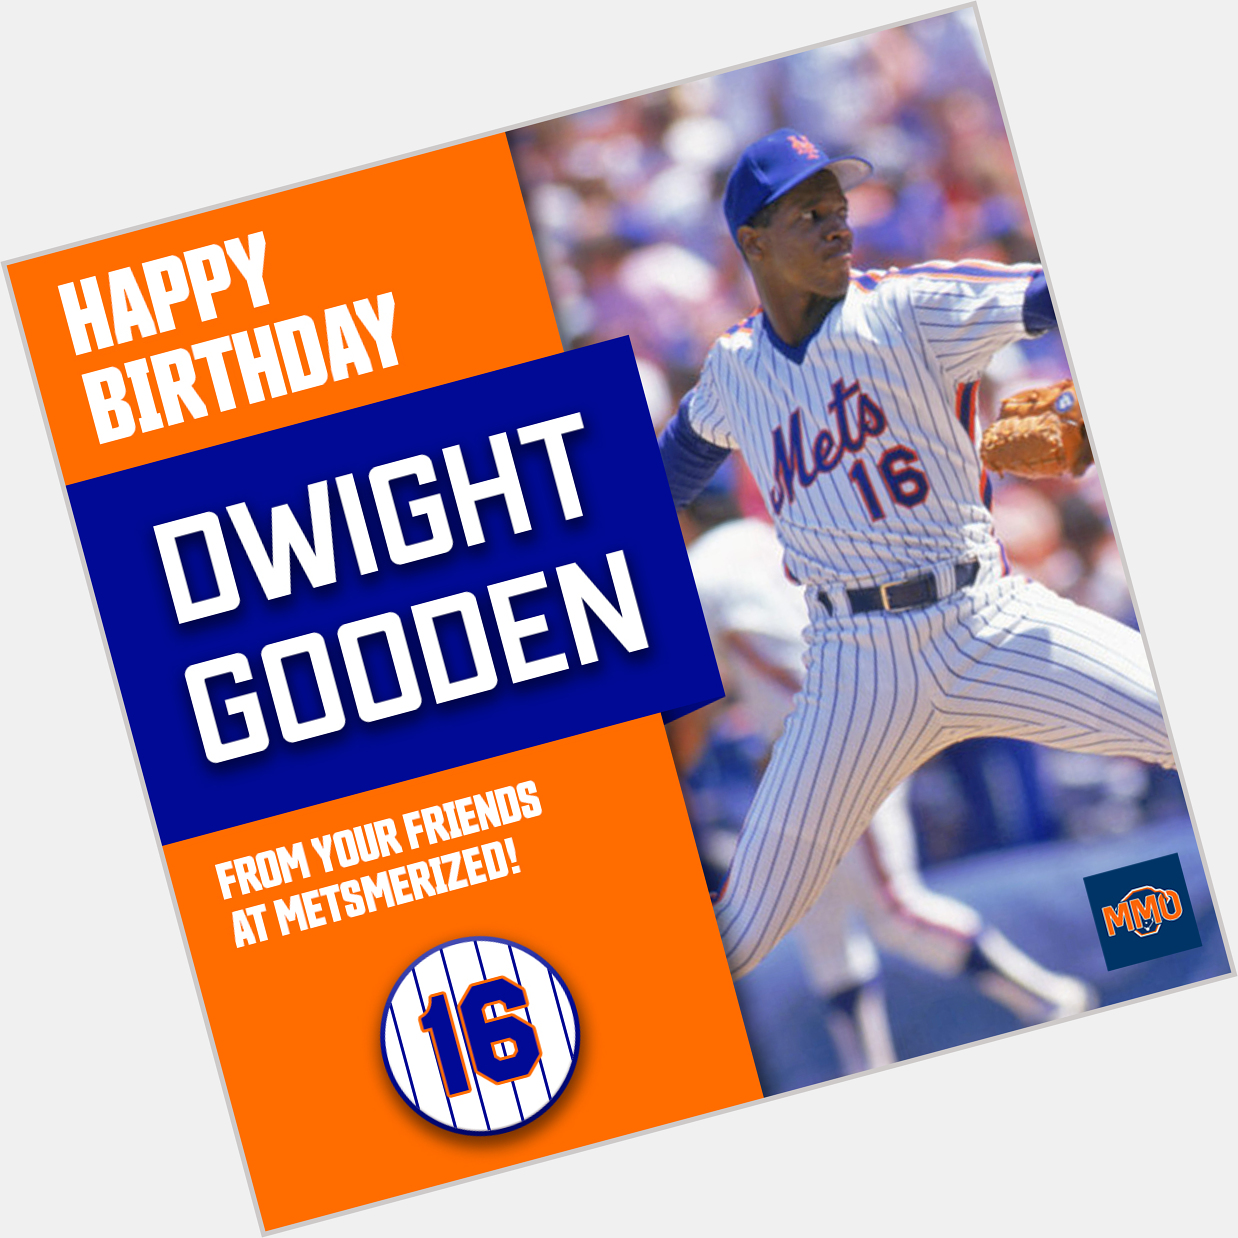 Happy Birthday to World Series champion Dwight Gooden! 